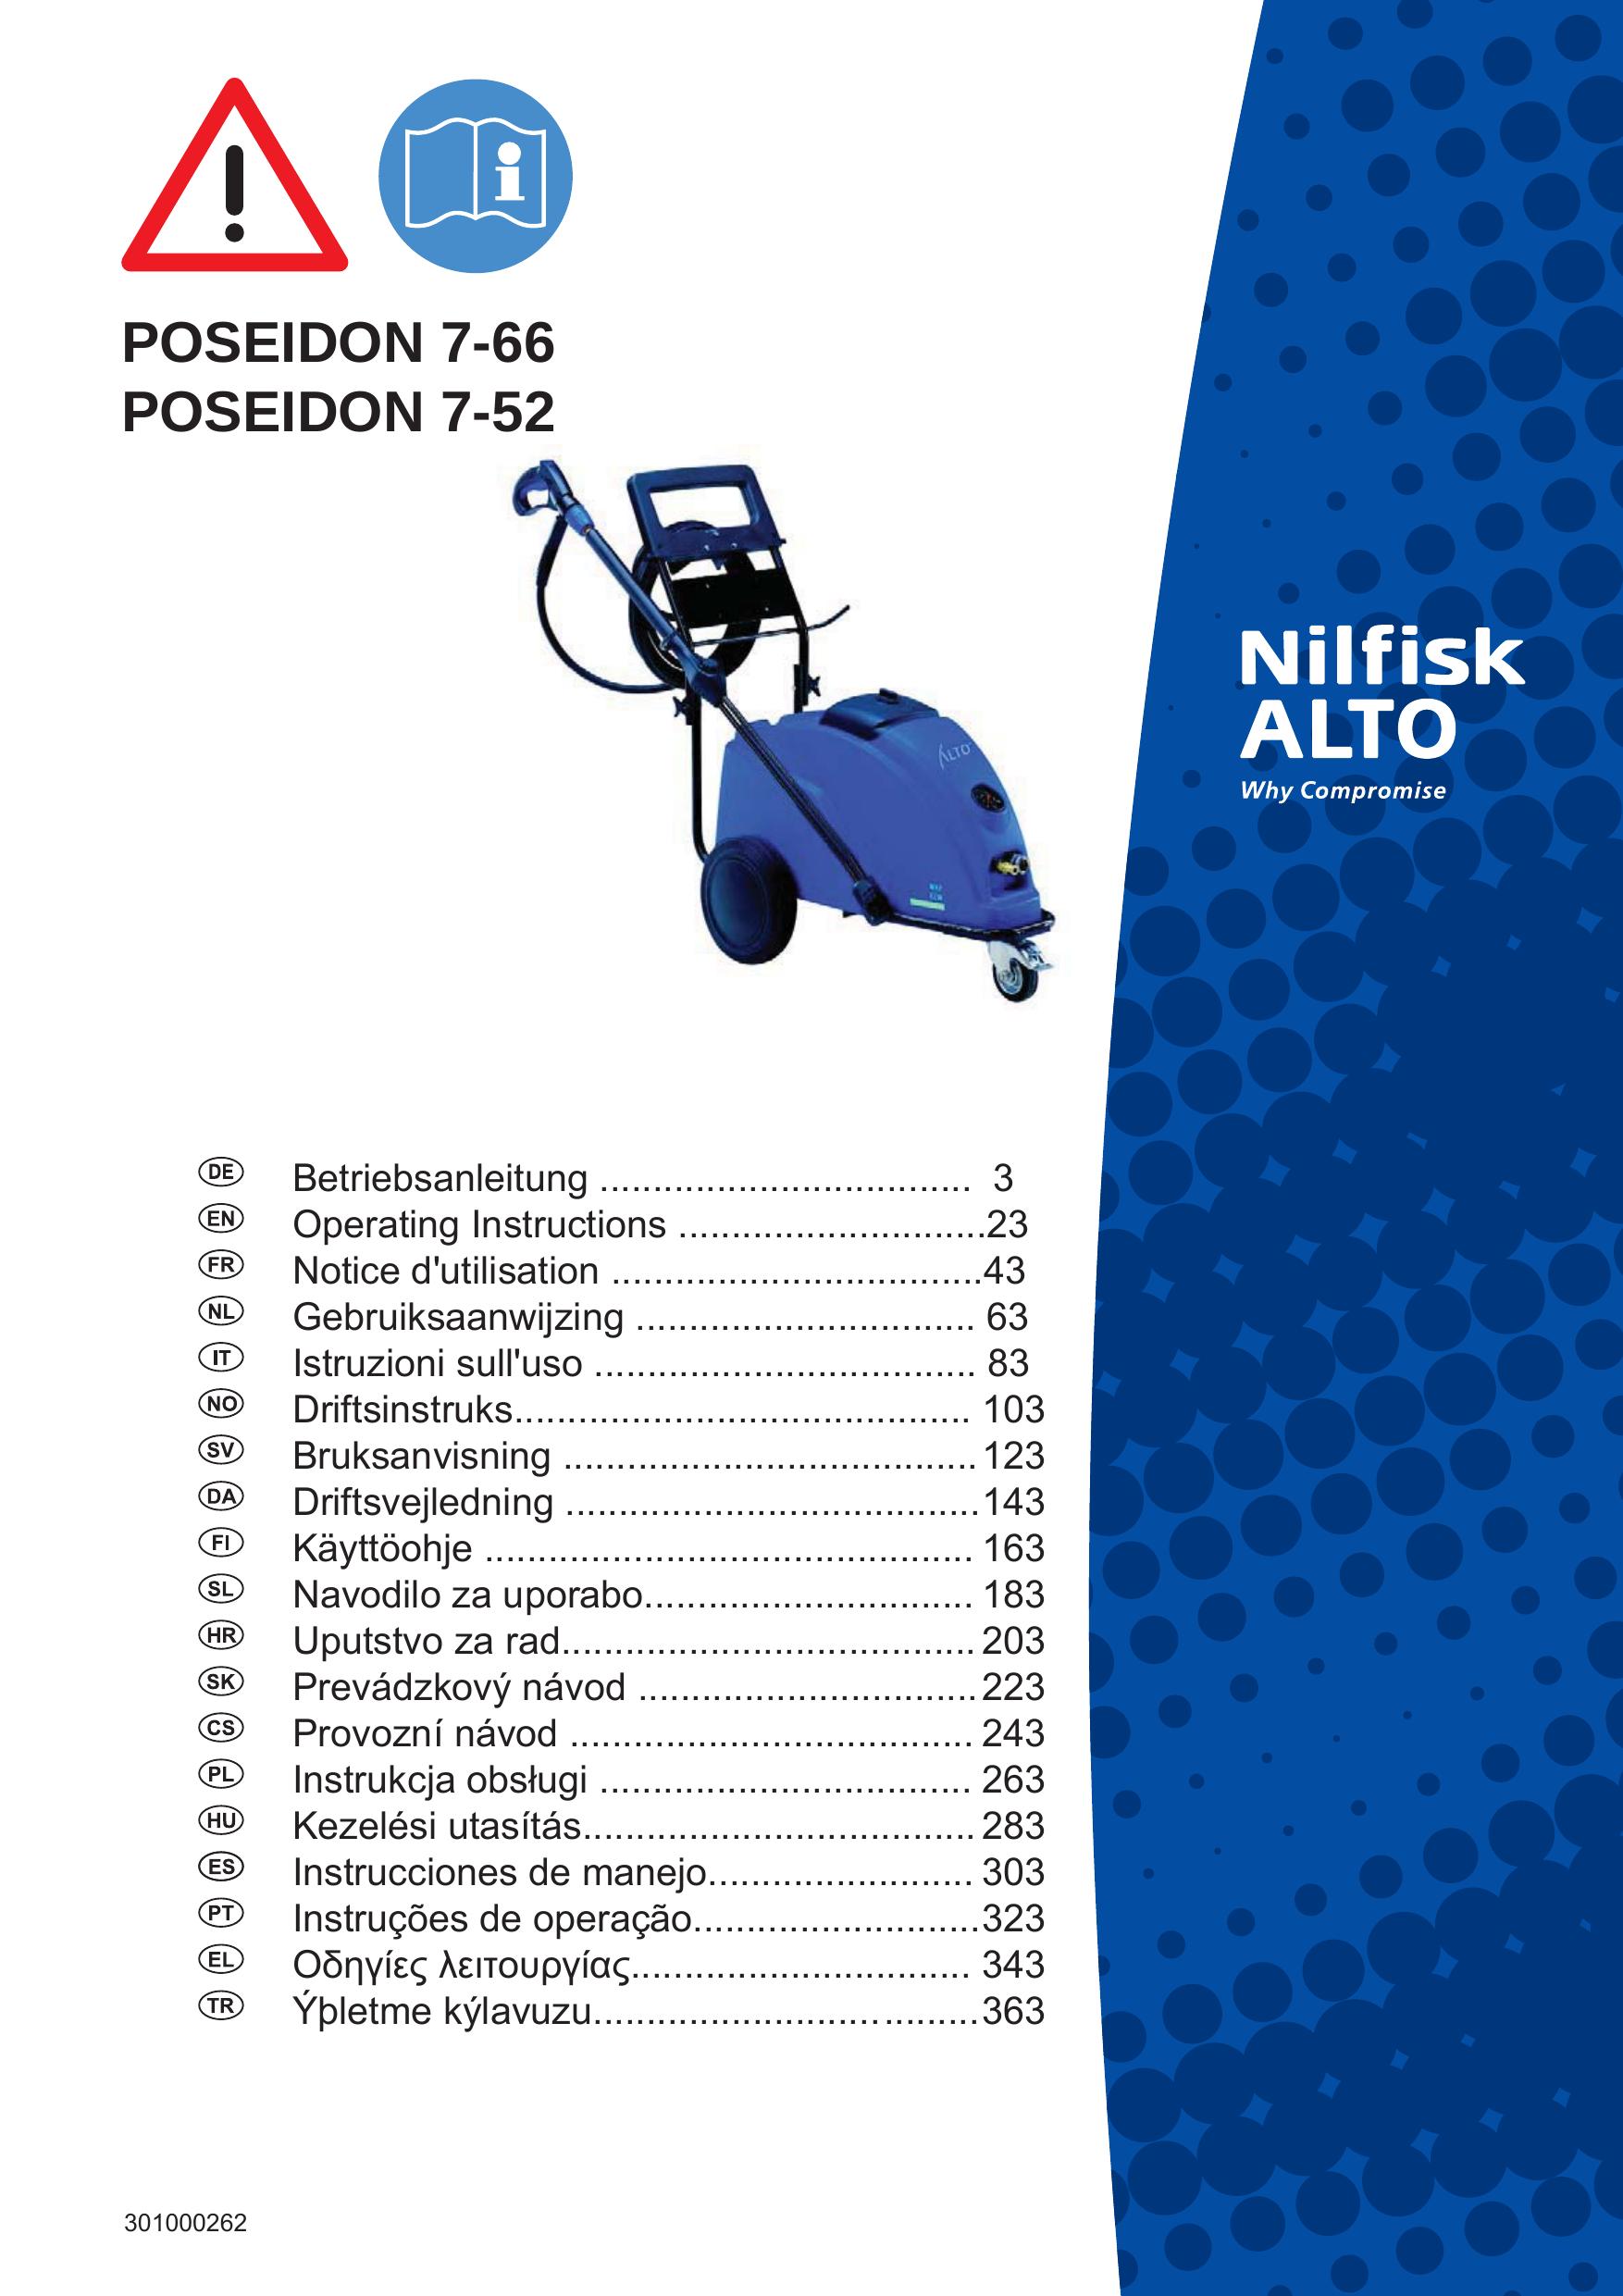 Nilfisk-ALTO POSEIDON 7-66 Pressure Washer User Manual